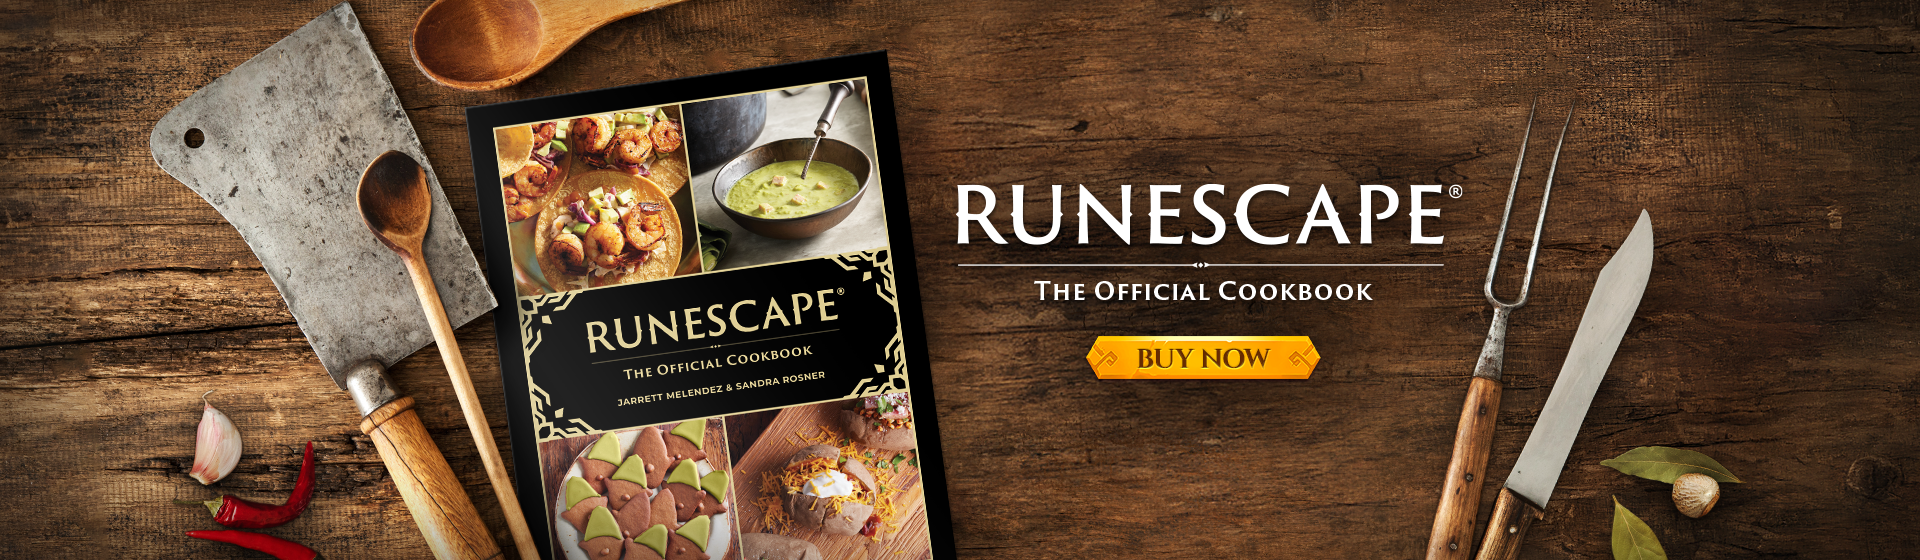 RuneScape - The Official Cookbook